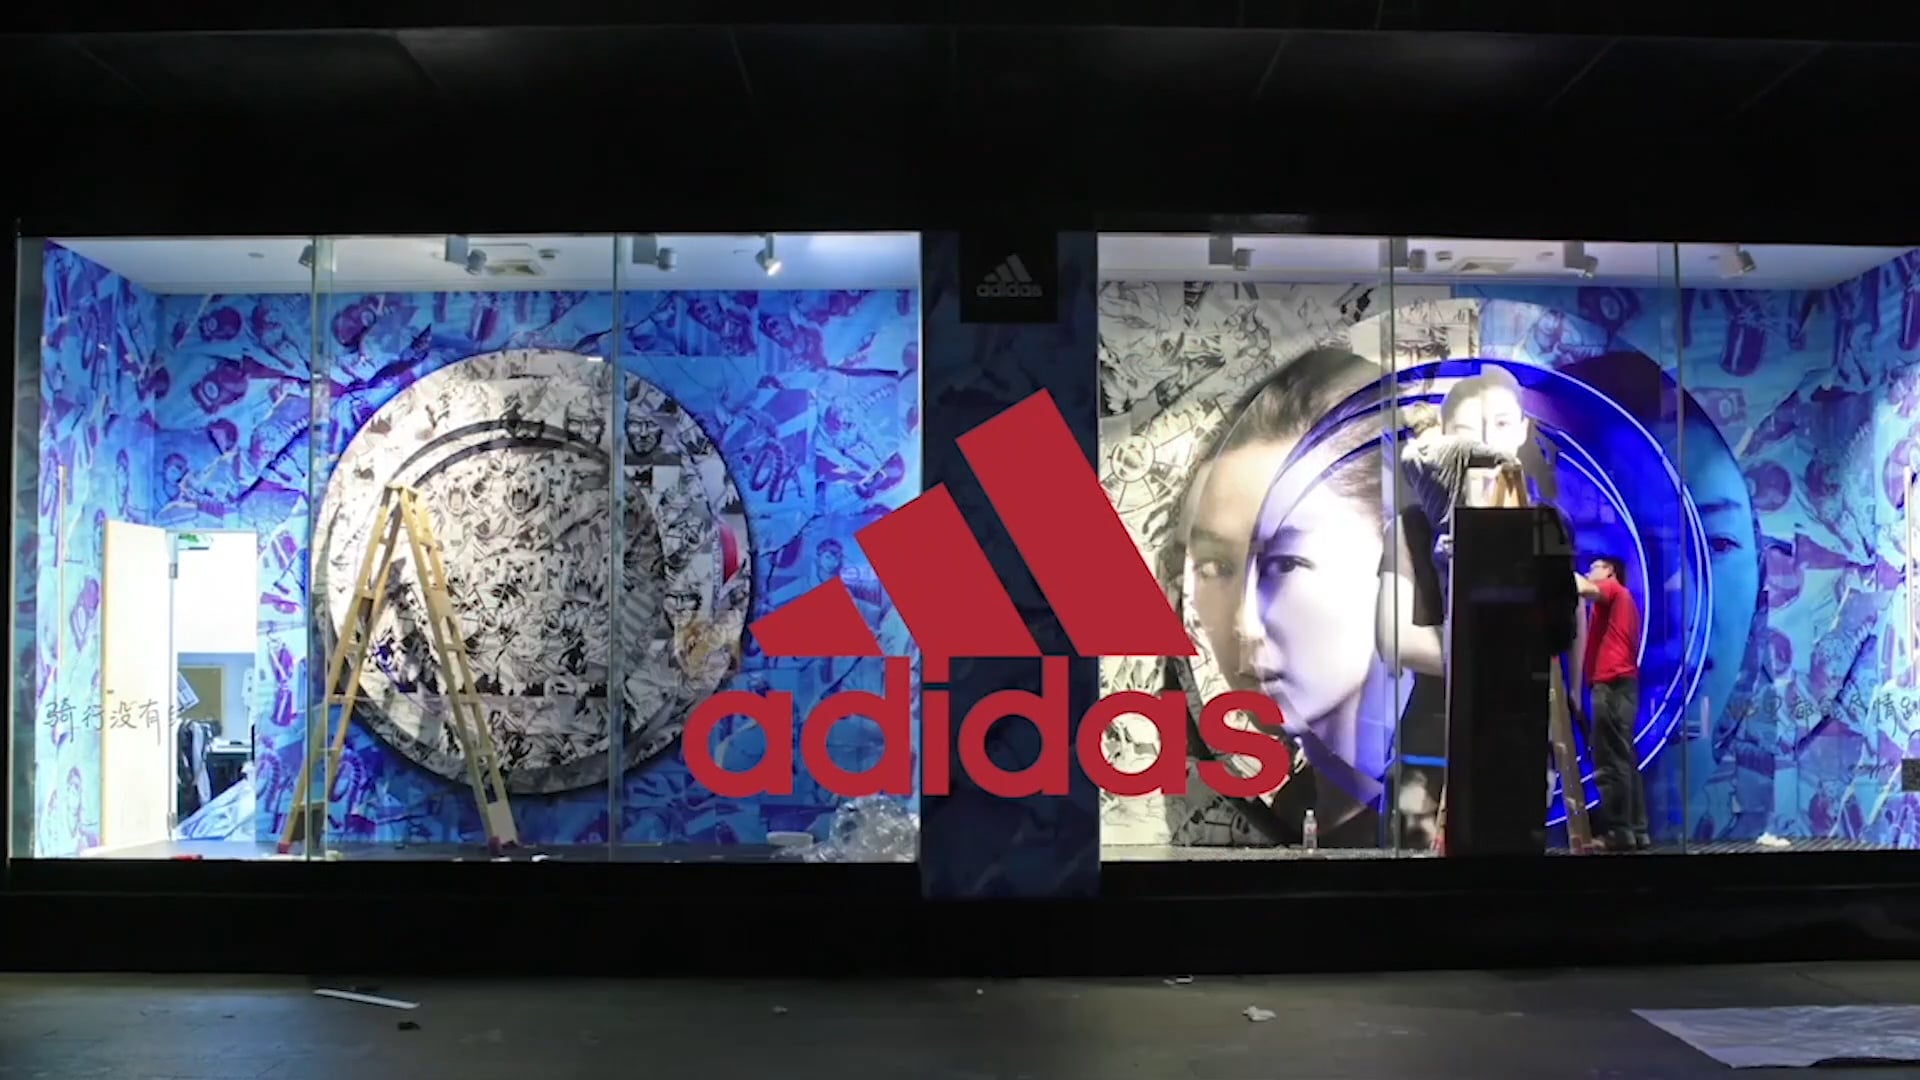 Adidas - Challenge - Agency Sockeye Creative  Creative Director - Tim Sproul  Role - Editor